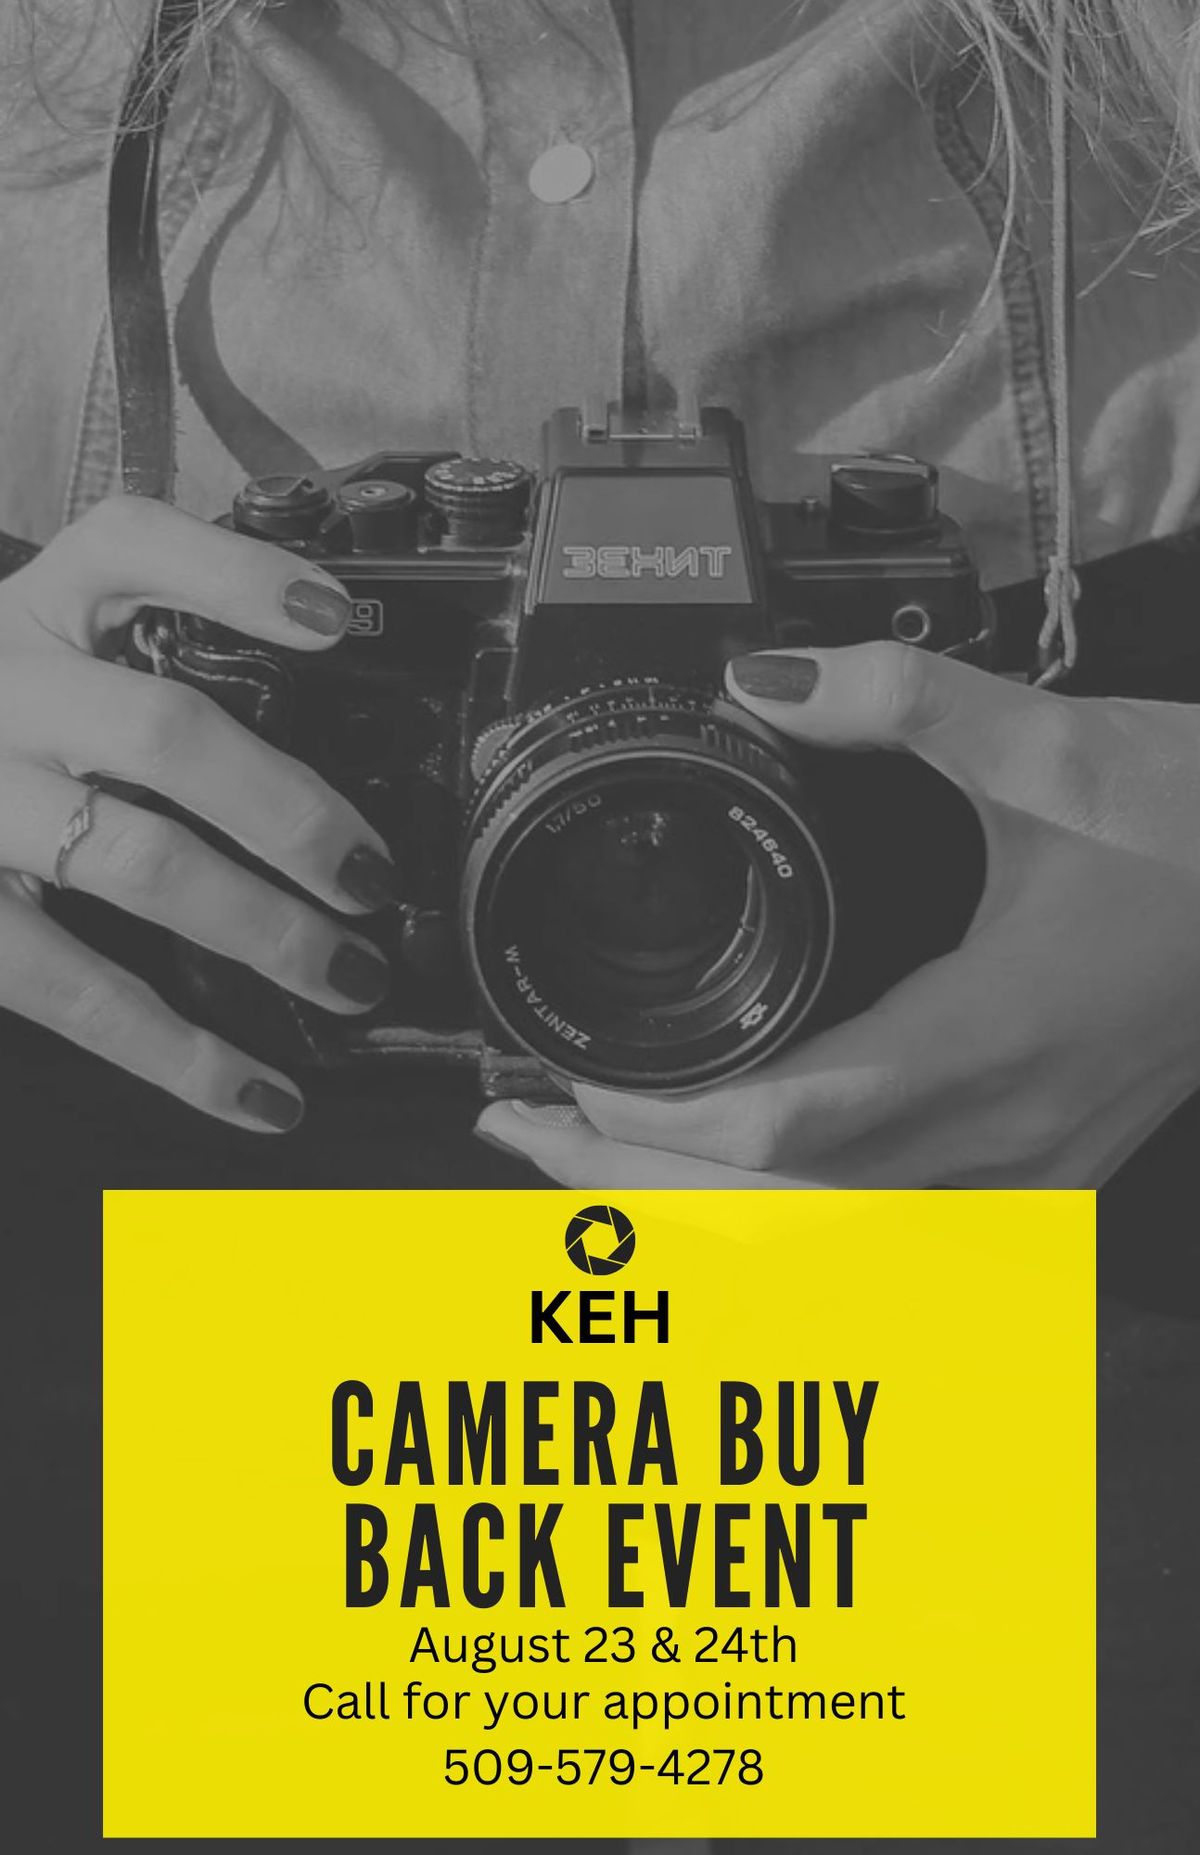 KEH Camera Buy Back Event